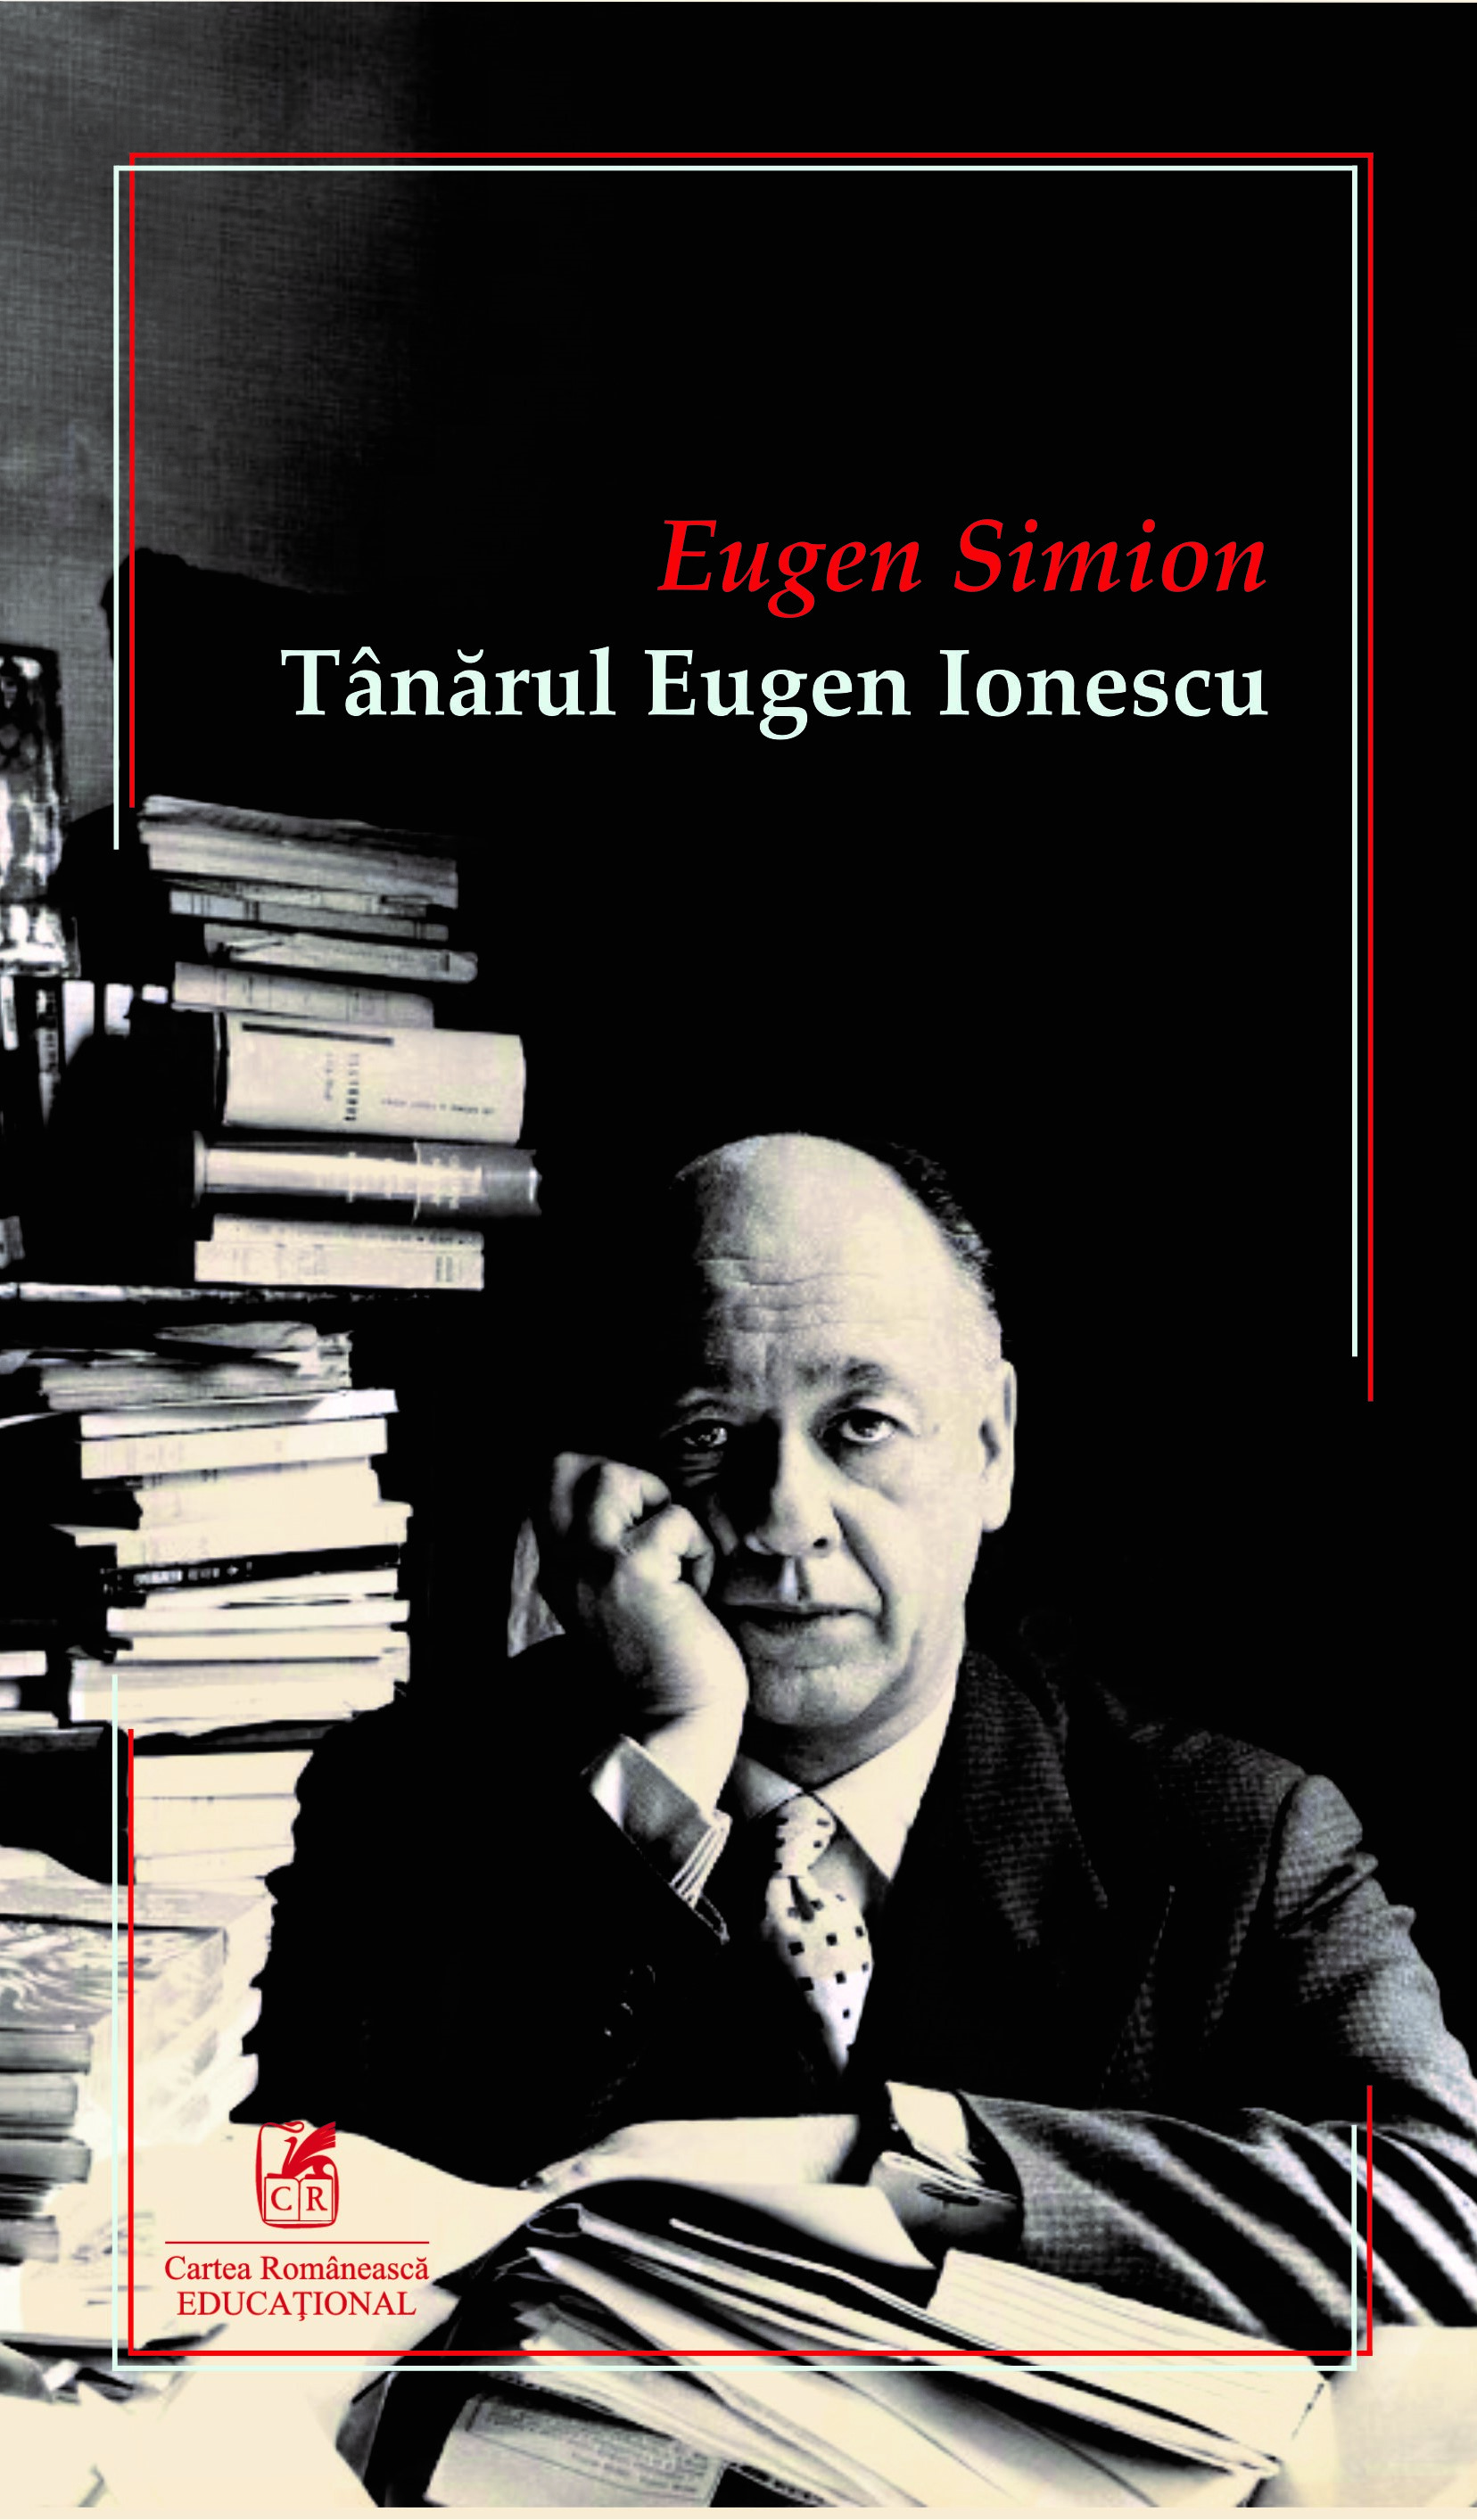 Tanarul Eugen Ionescu | Eugen Simion Cartea Romaneasca educational poza bestsellers.ro